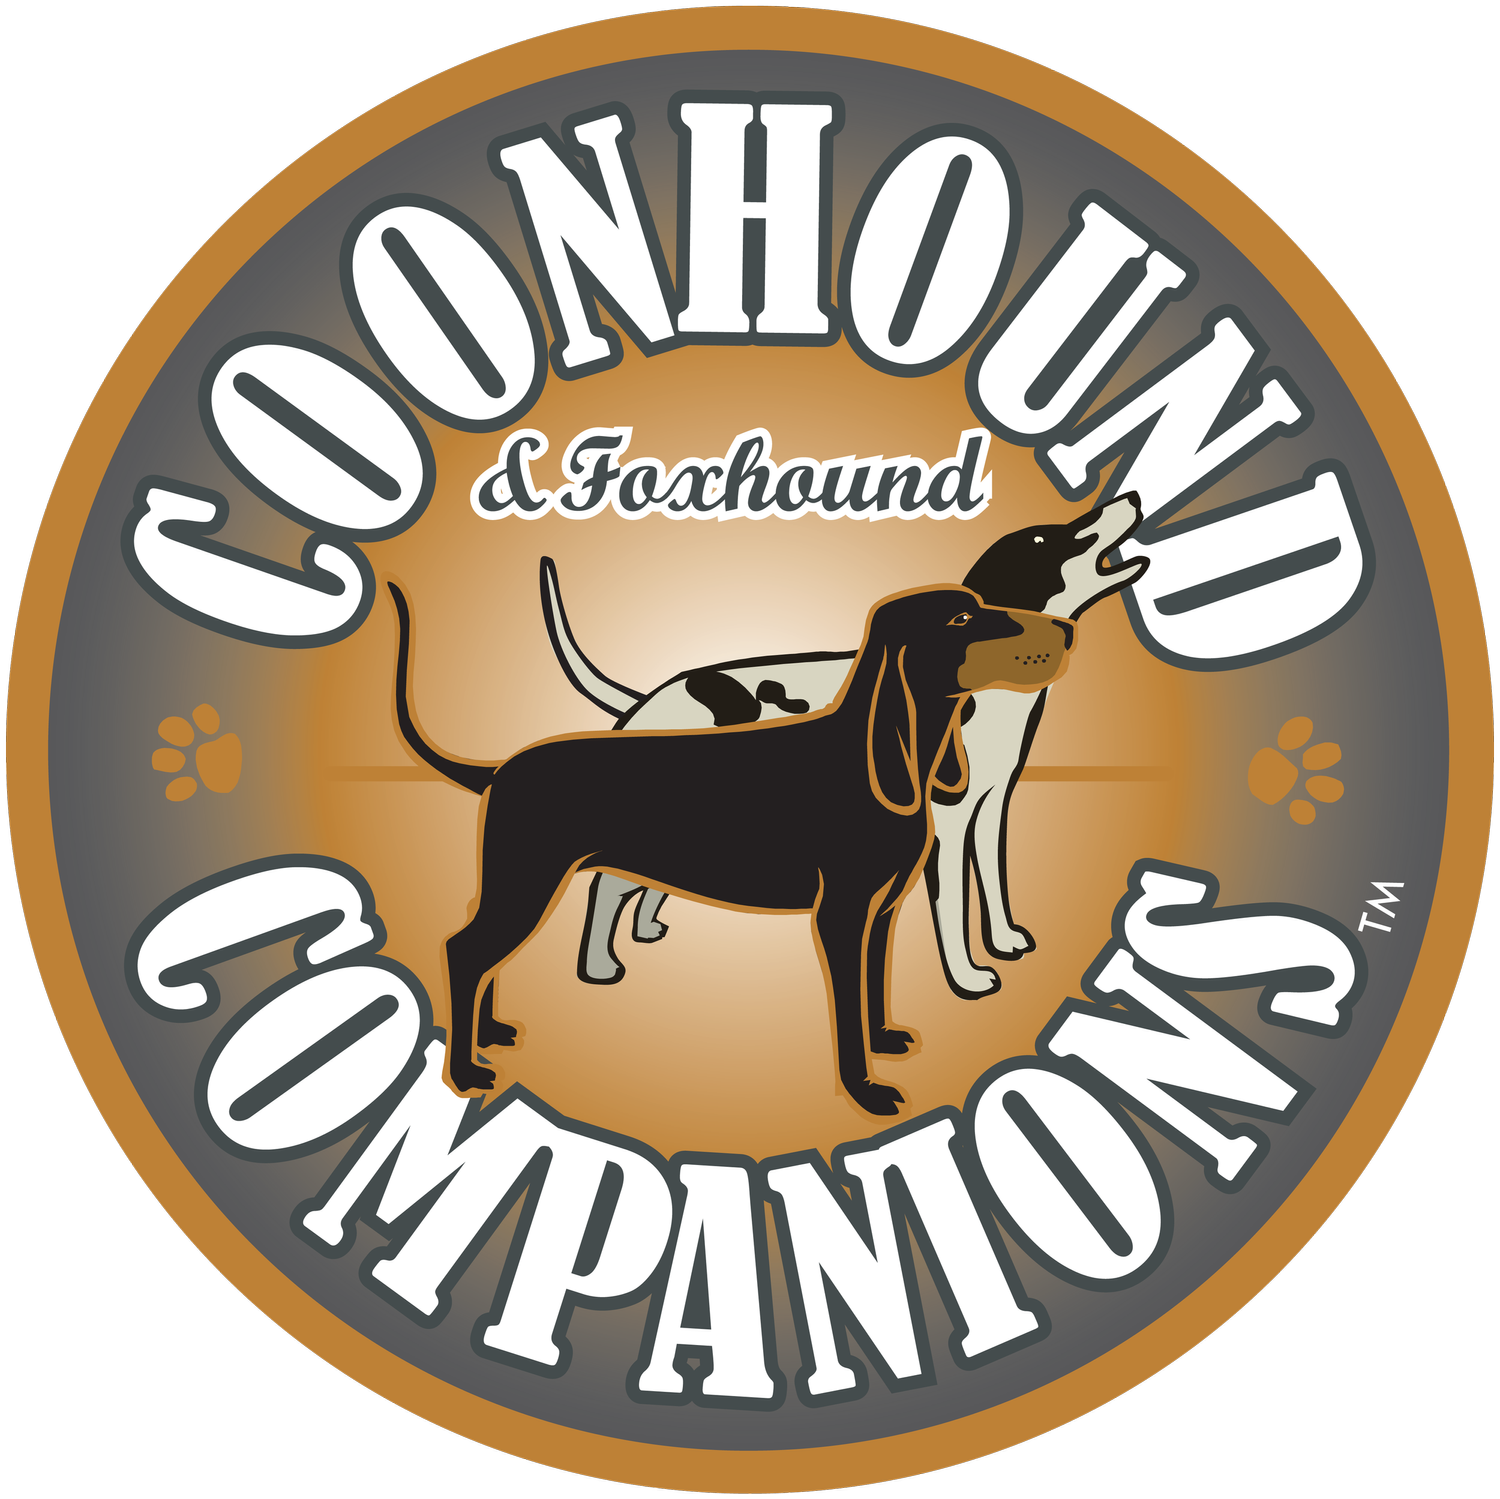 Coonhound &amp; Foxhound Companions